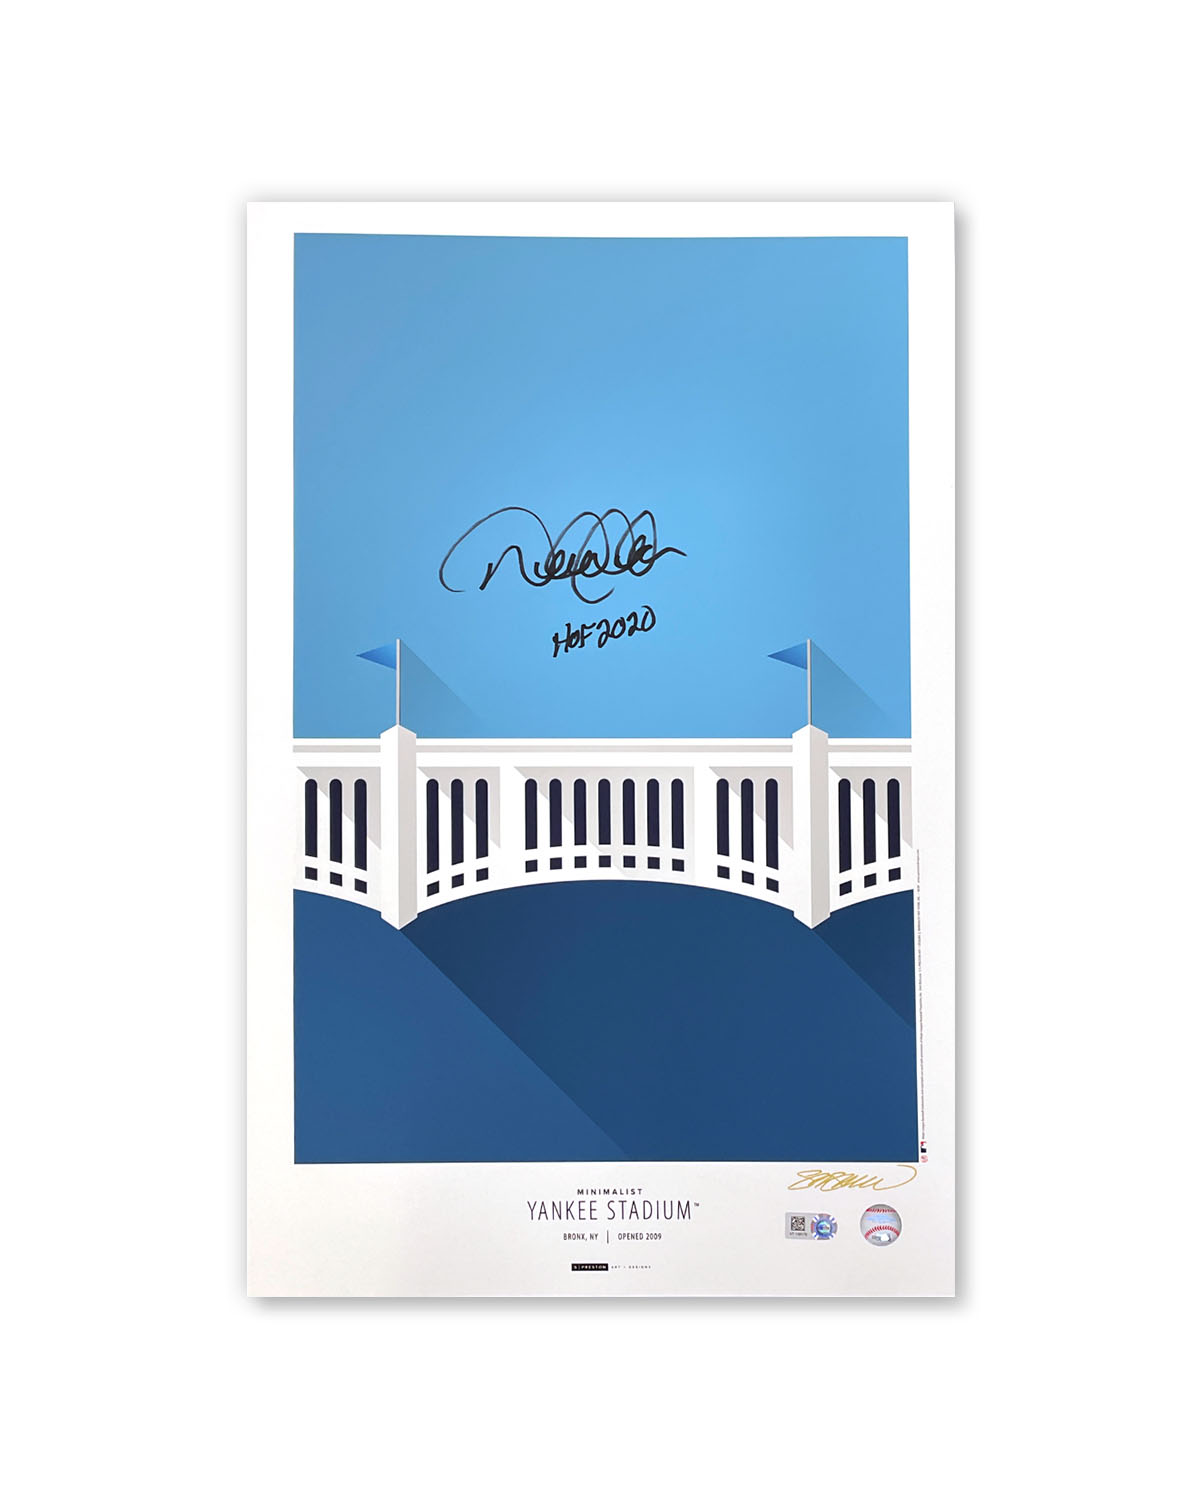 Minimalist Yankee Stadium - Derek Jeter Autographed - Poster Print - MLB Authenticated